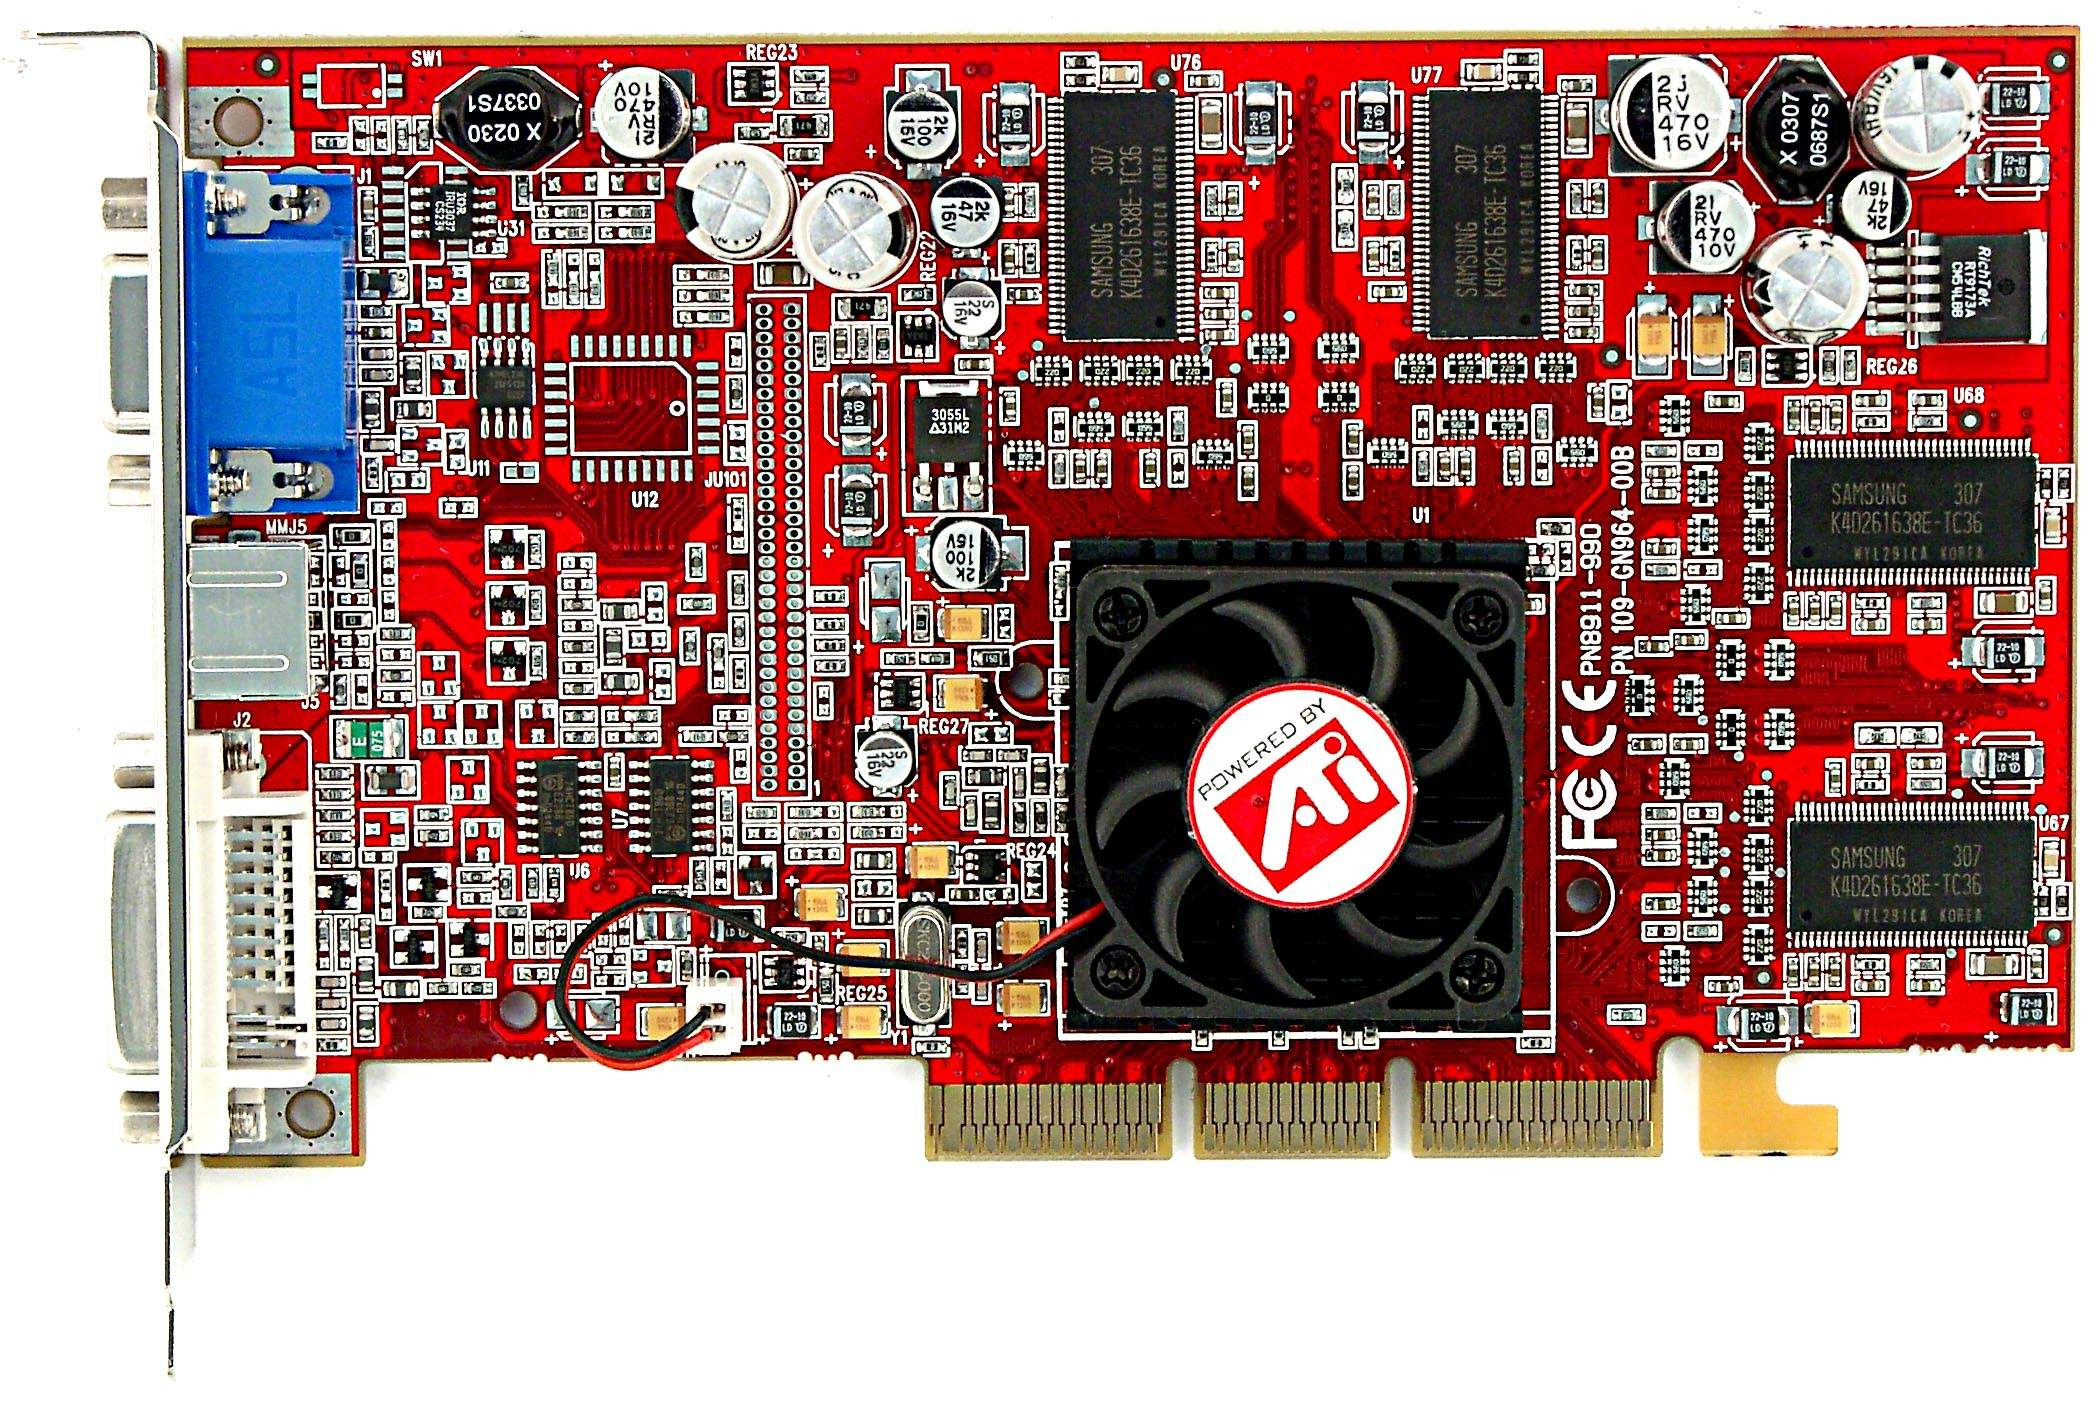 Ati radeon pro драйвера. Видеокарта ATI Radeon 9000. ATI Mobility Radeon 9000 IGP. Radeon 9000 Pro. Radeon 9000 Pro 64mb.